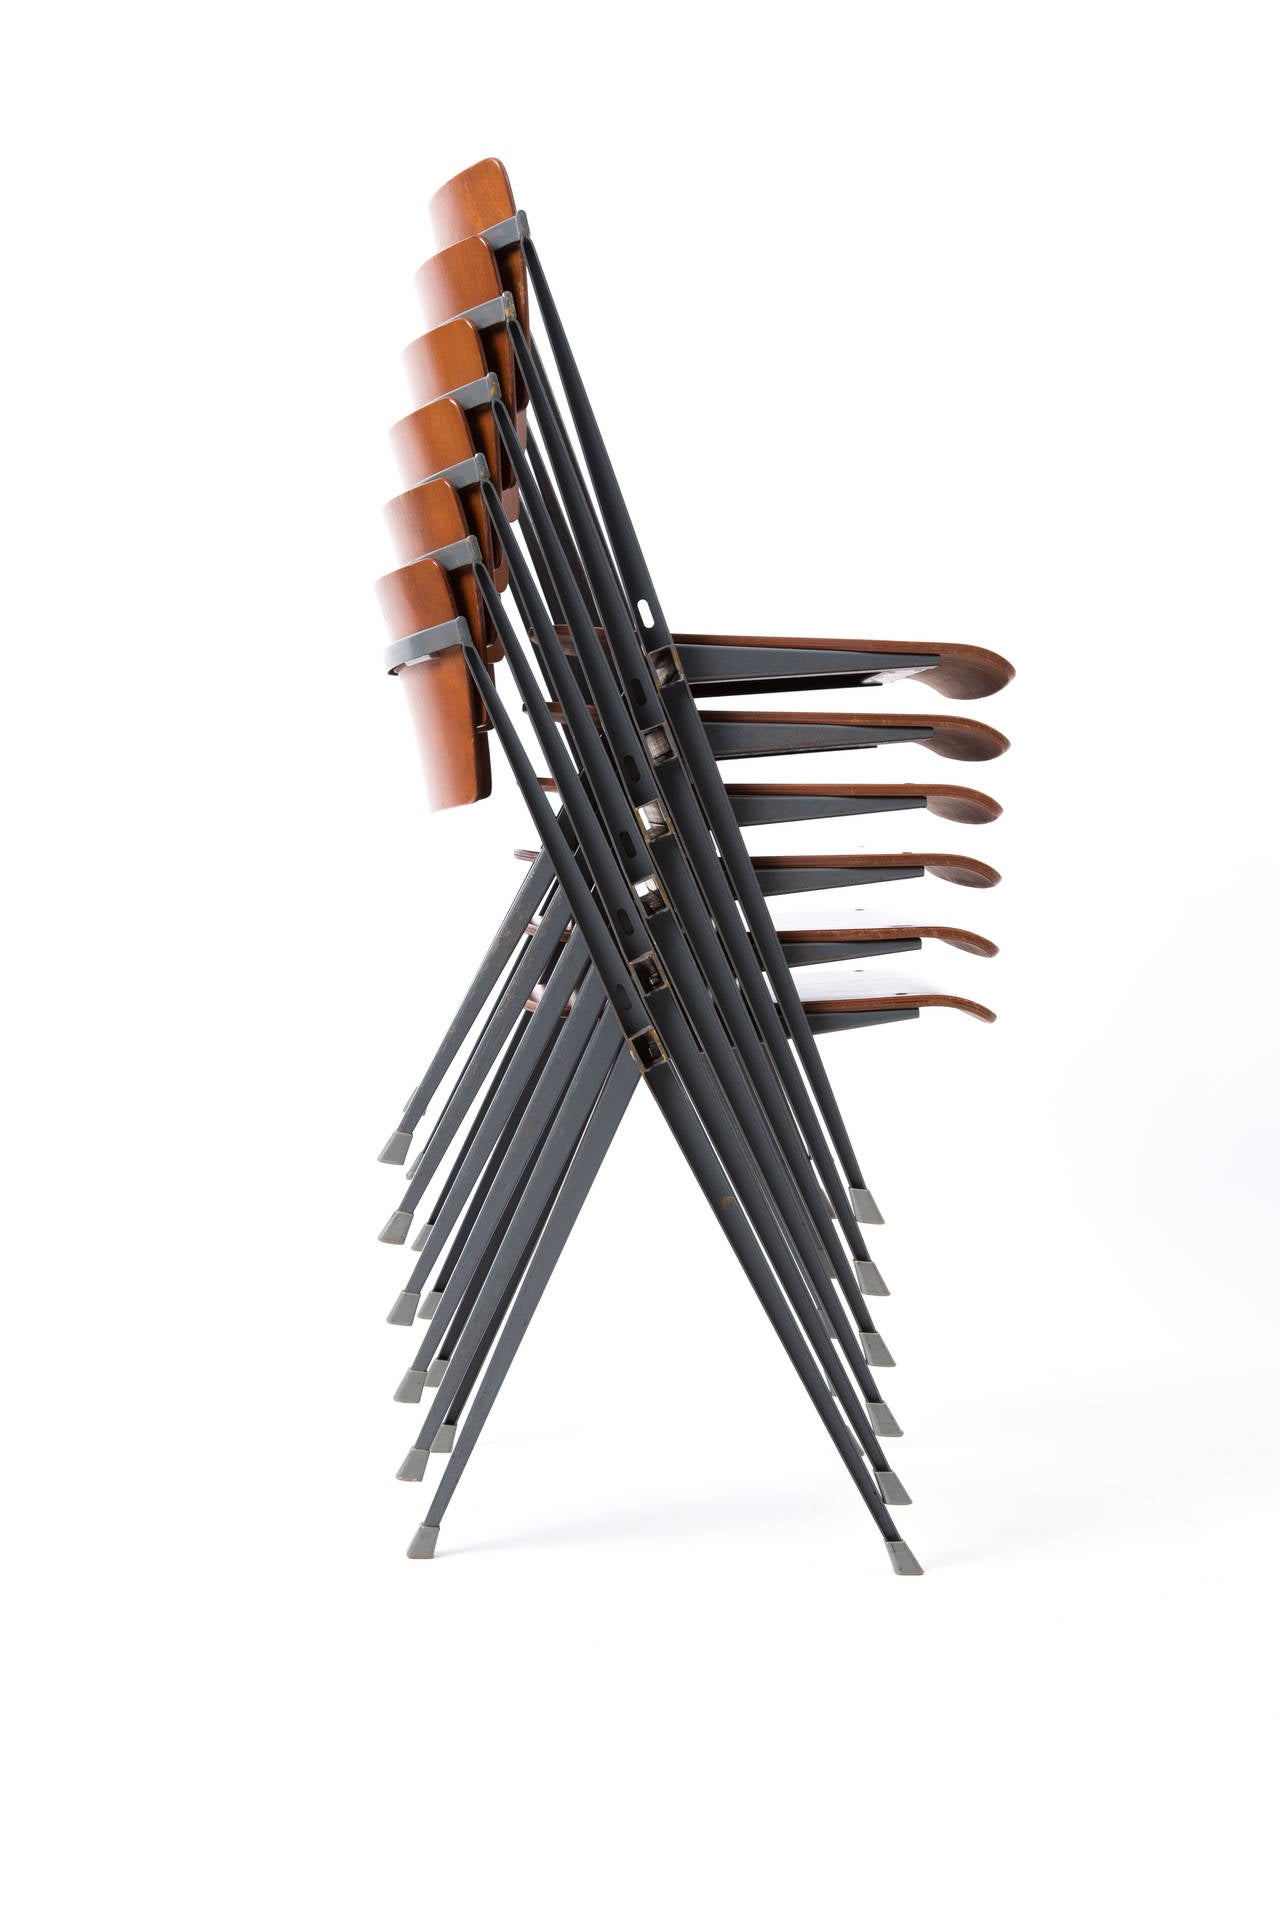 Wim Rietveld Pyramide Ahrend de Cirkel Chairs For Sale 3